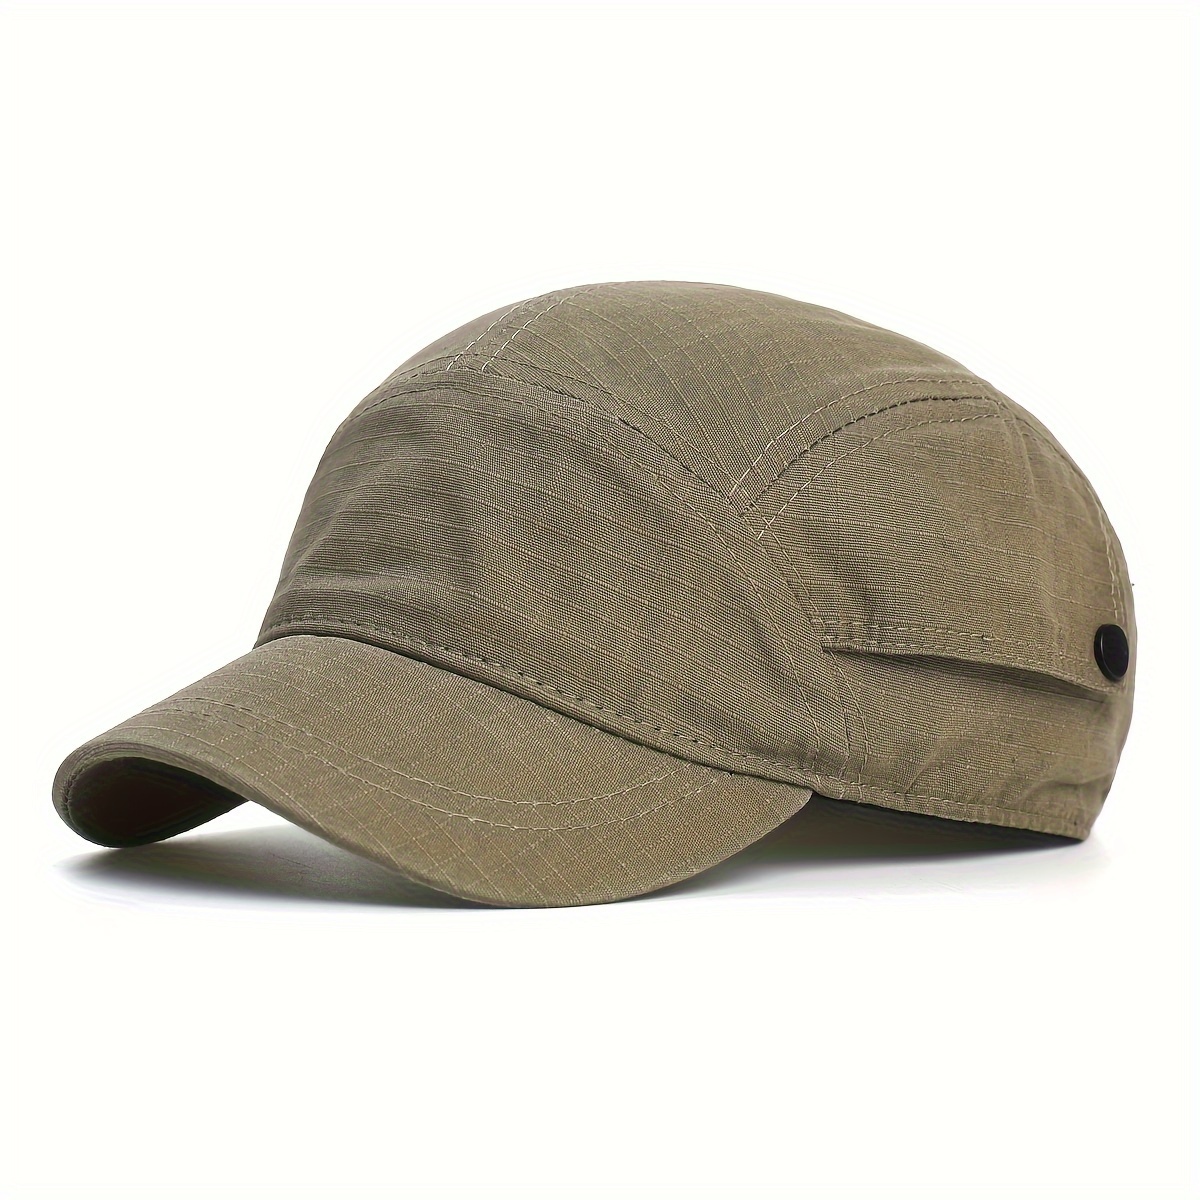 

Adjustable Trucker Style Low Top Hat - Short Brim Baseball Cap For Men And Women, Soft Vintage Dad Hat In Cotton